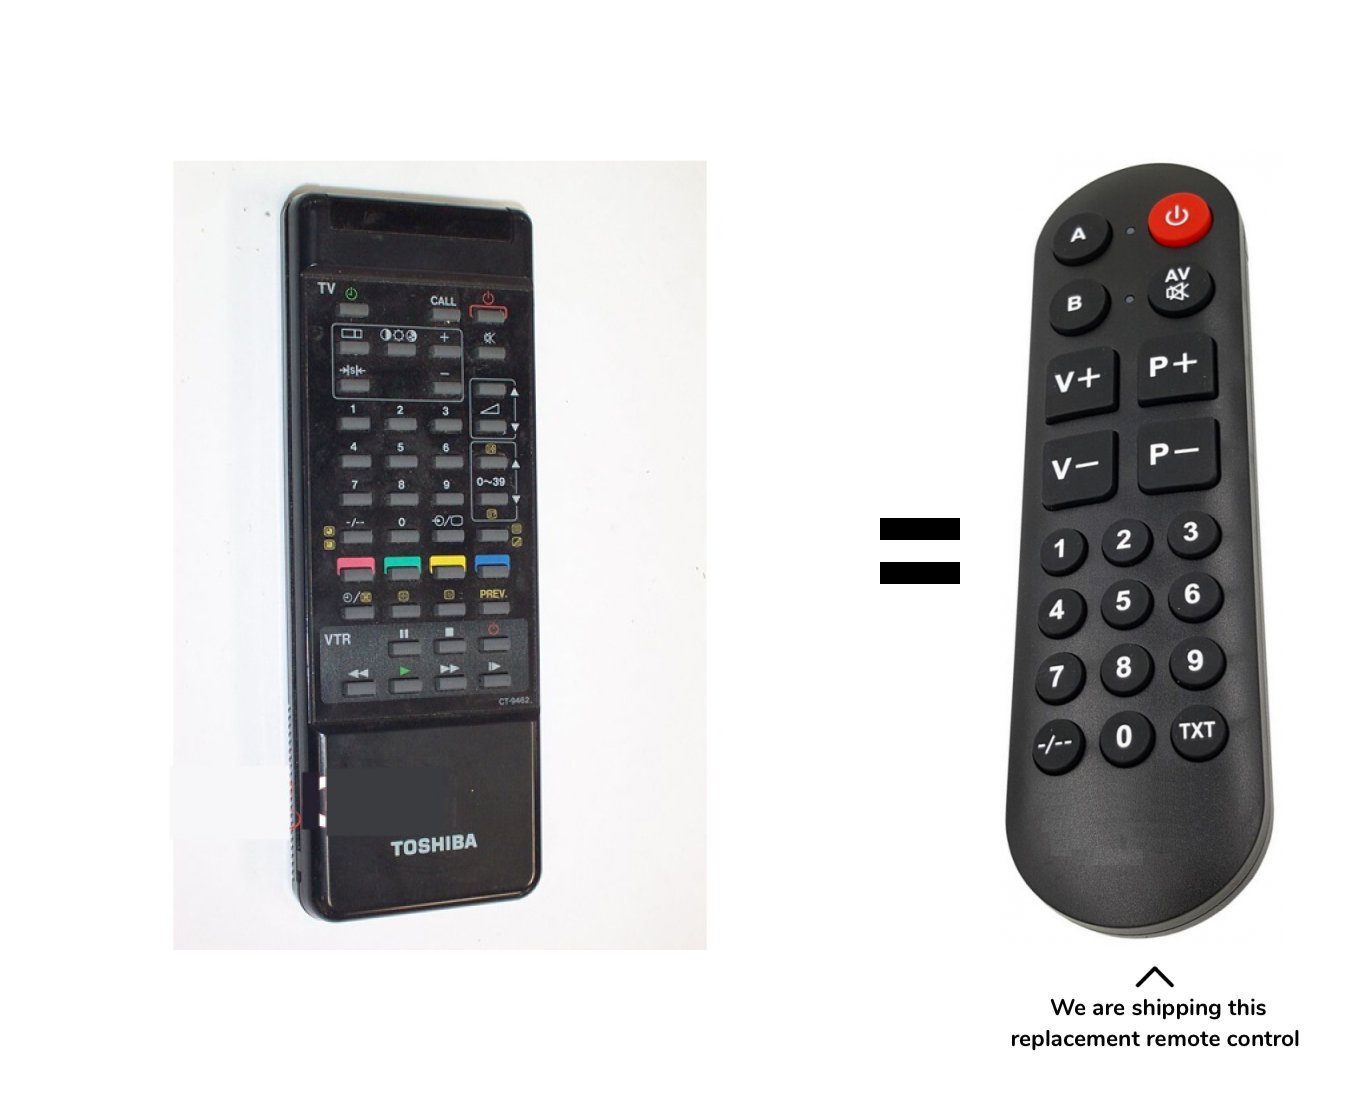 Toshiba 1510RD remote control for seniors